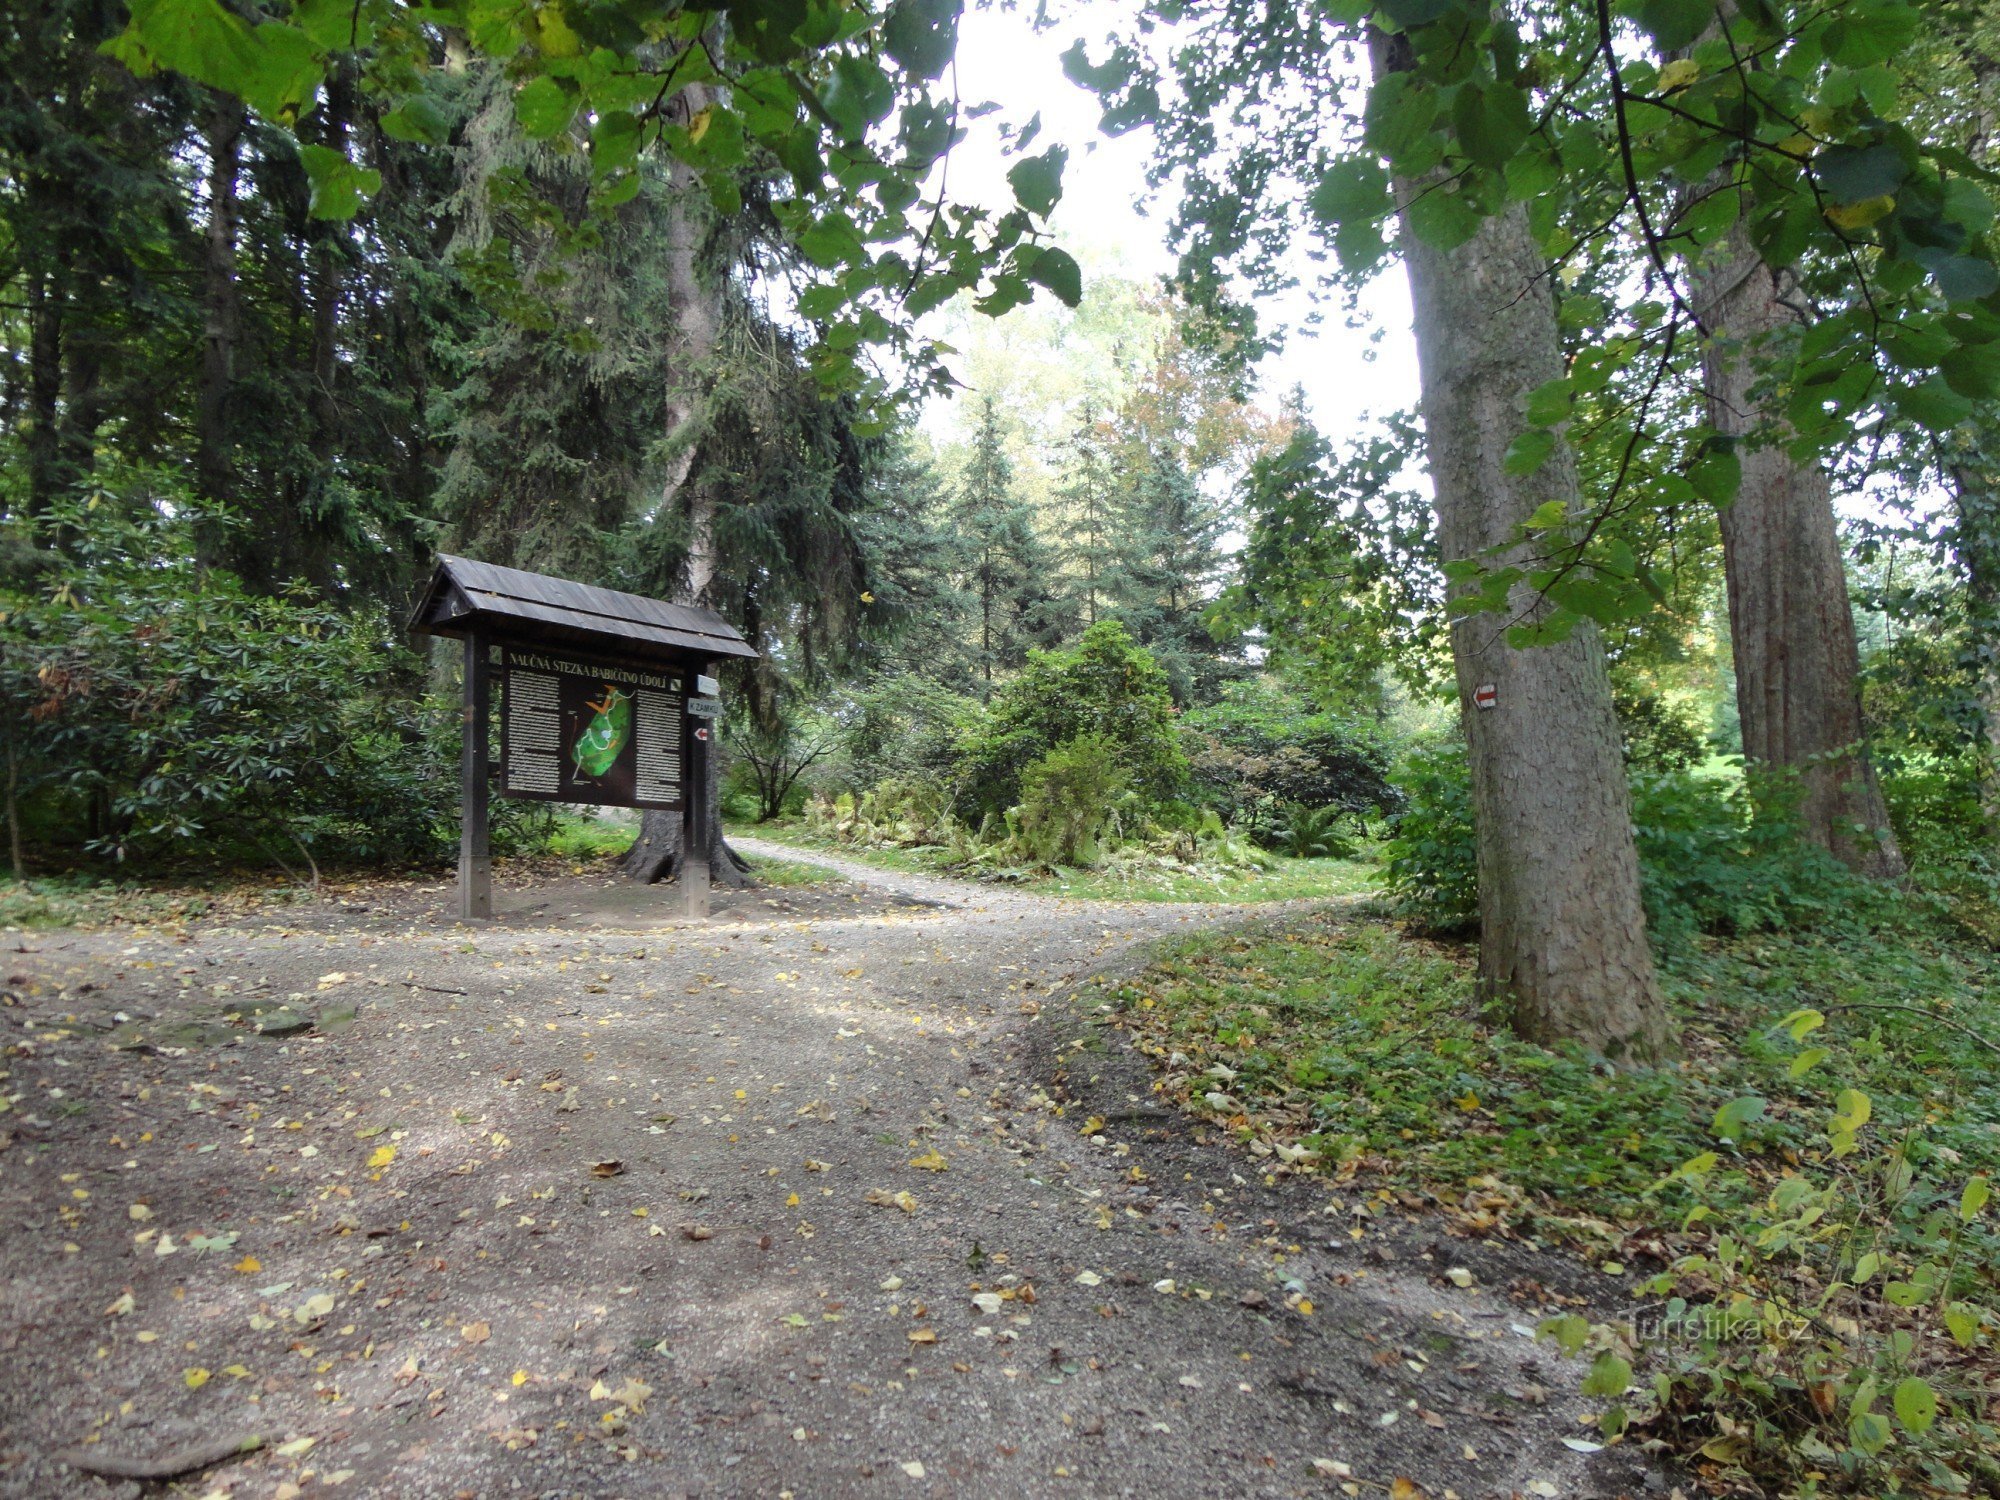 Babiččina údolí educational trail